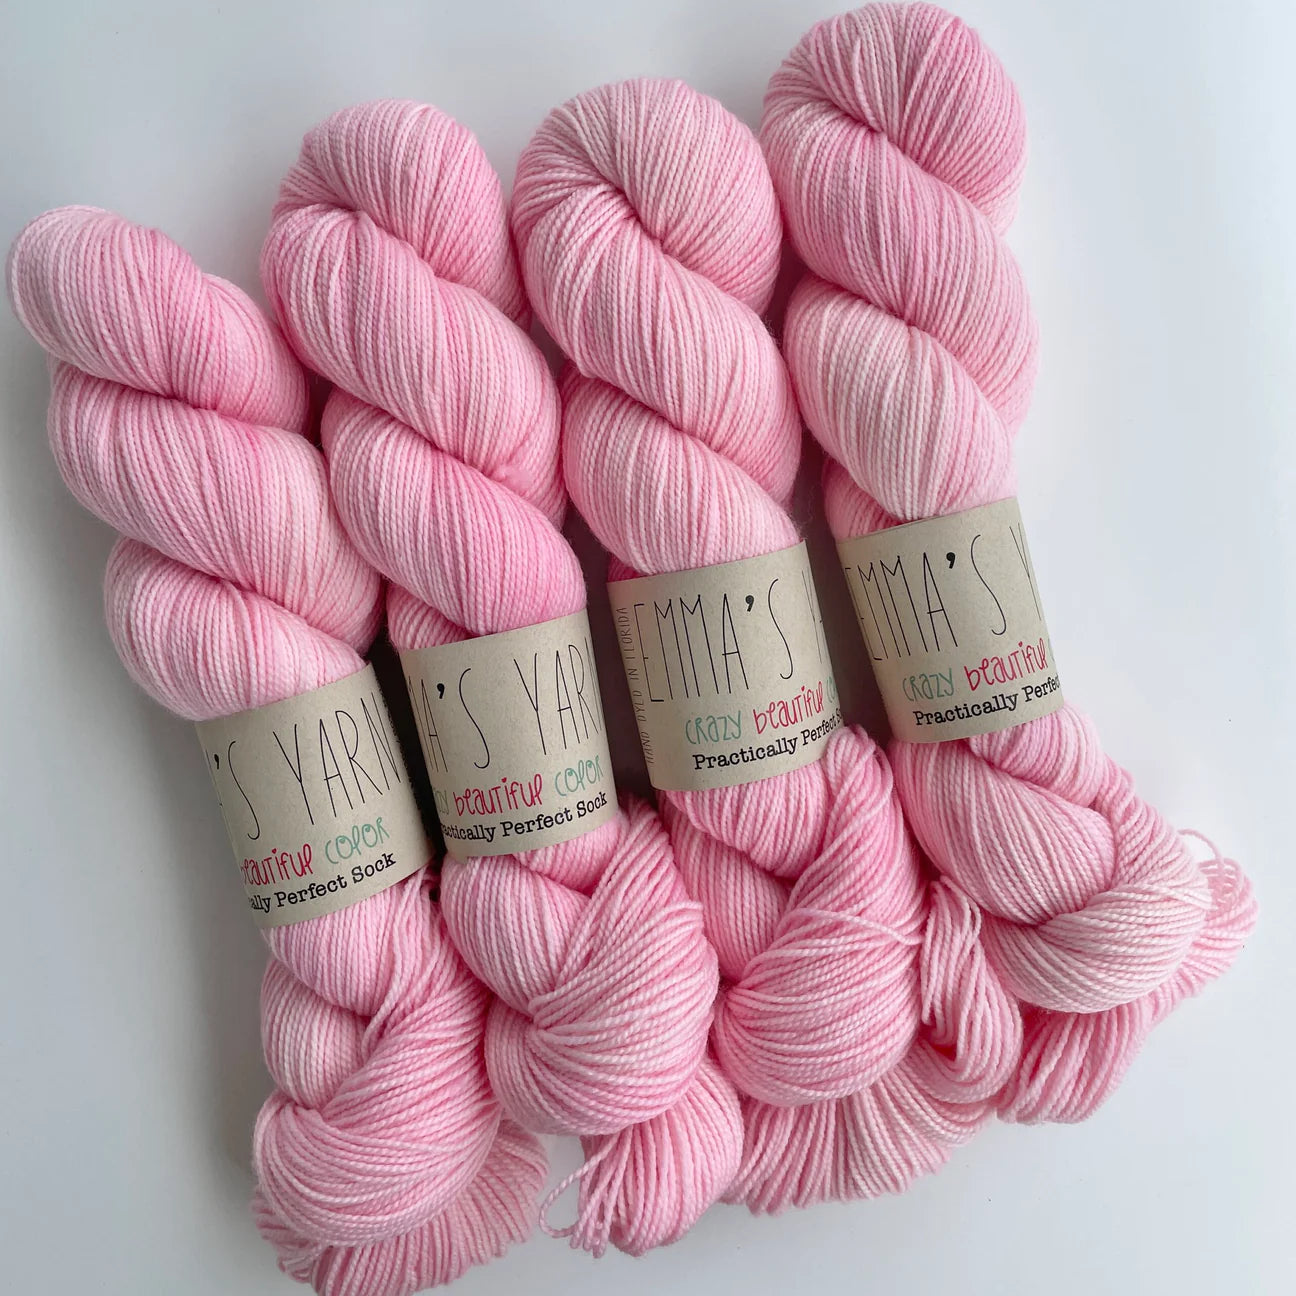 Emmas yarn; Practically perfect Sock;Poppin